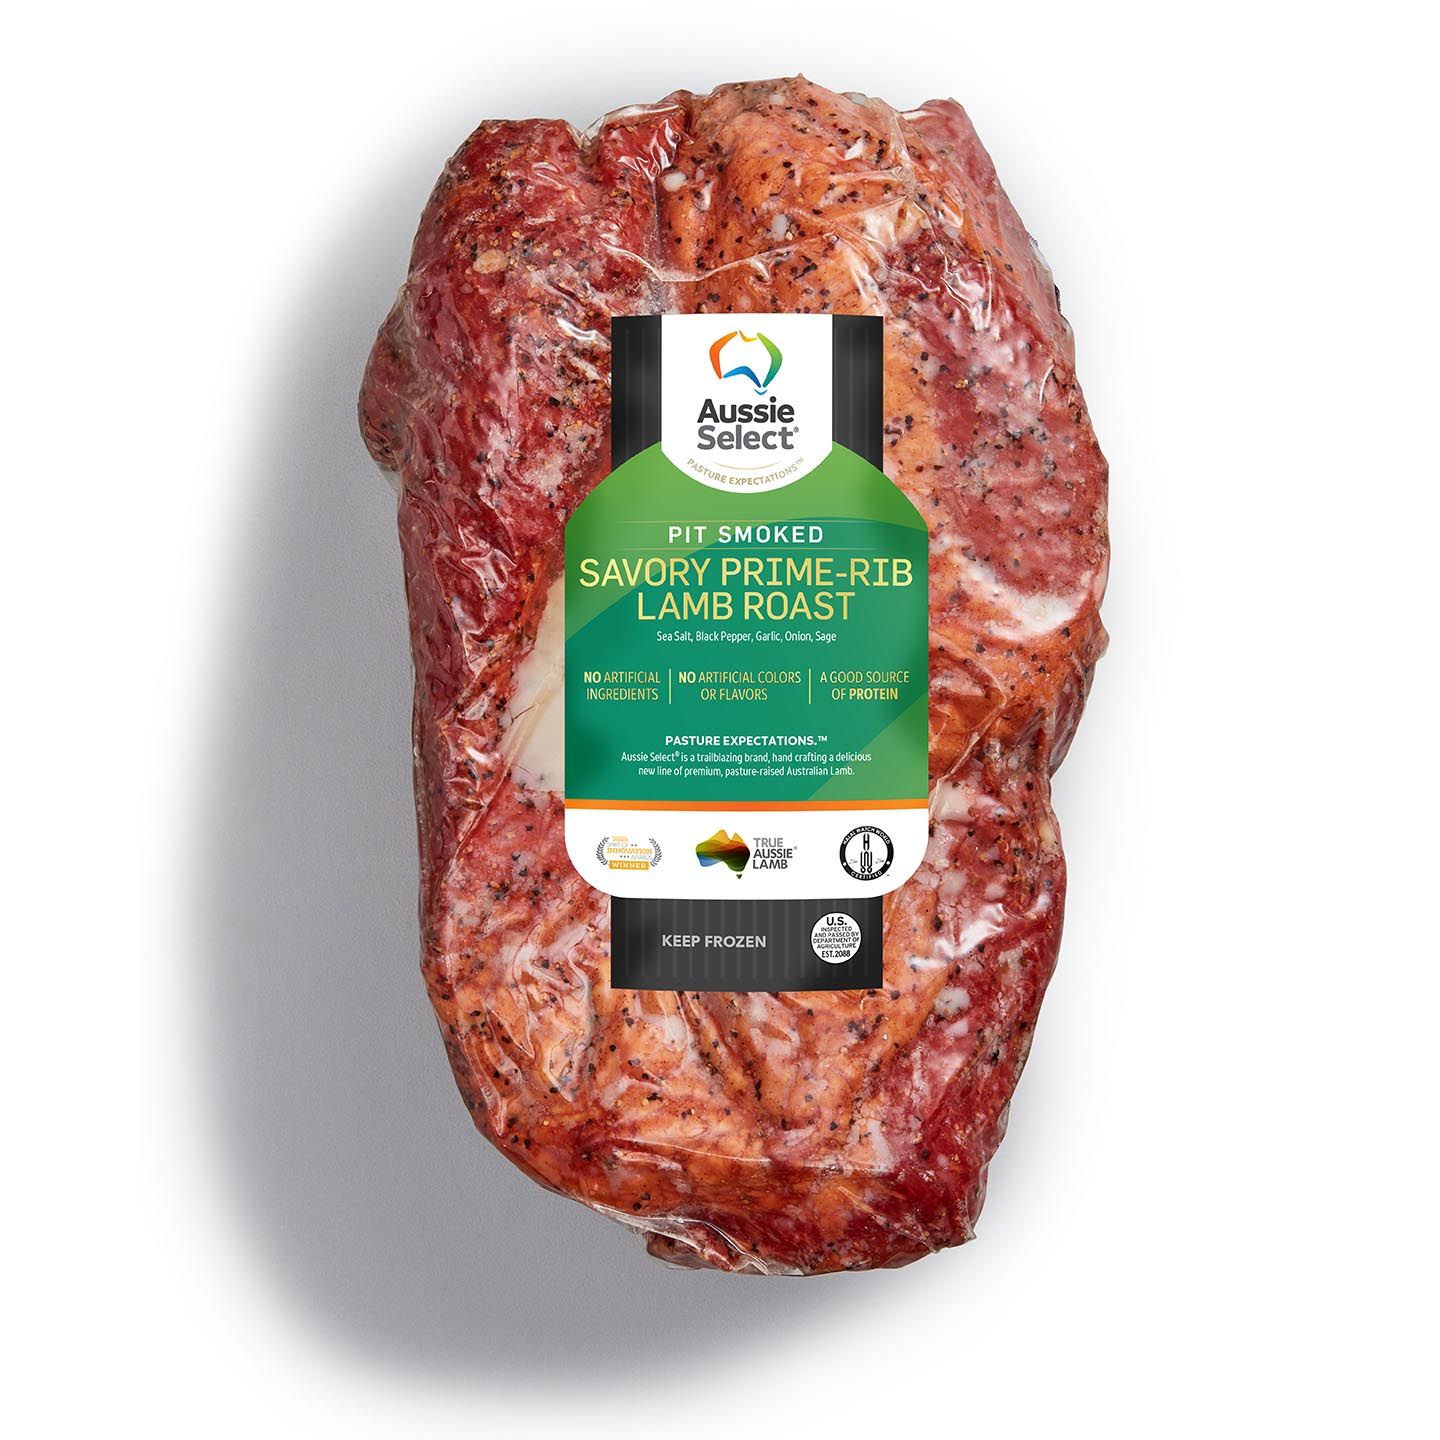 Aussie Select Pit Smoked Savory Prime Rib Lamb Roast, Whole, 1.6lbs